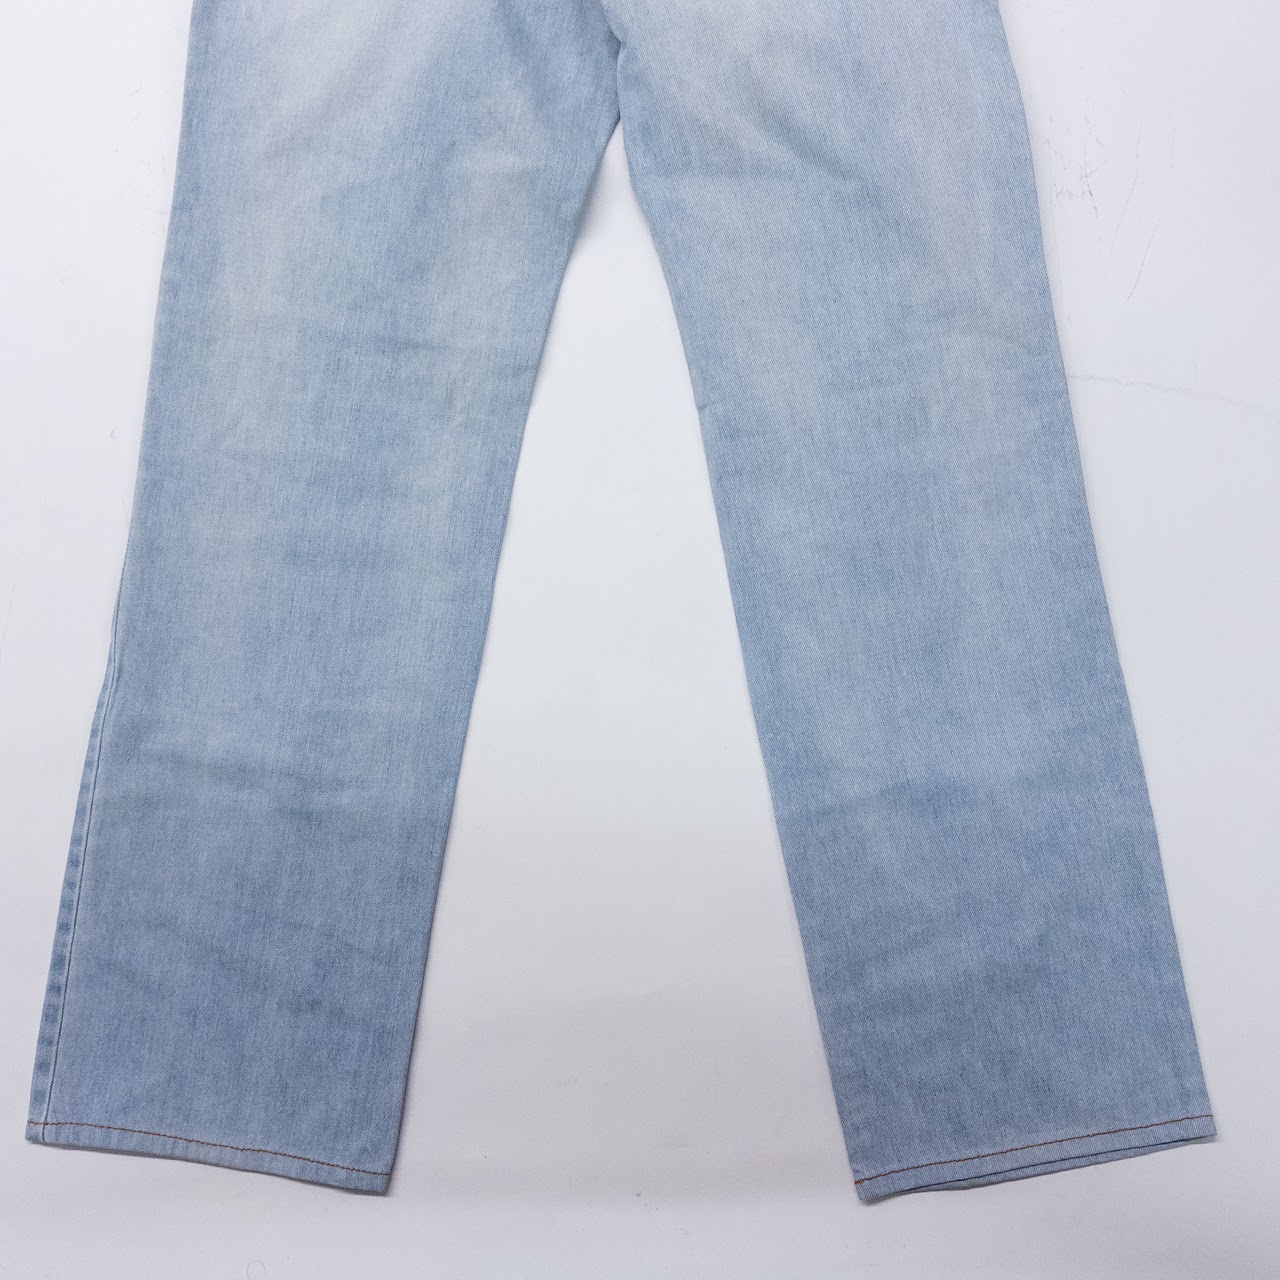 D&G Light Denim Distressed Jeans